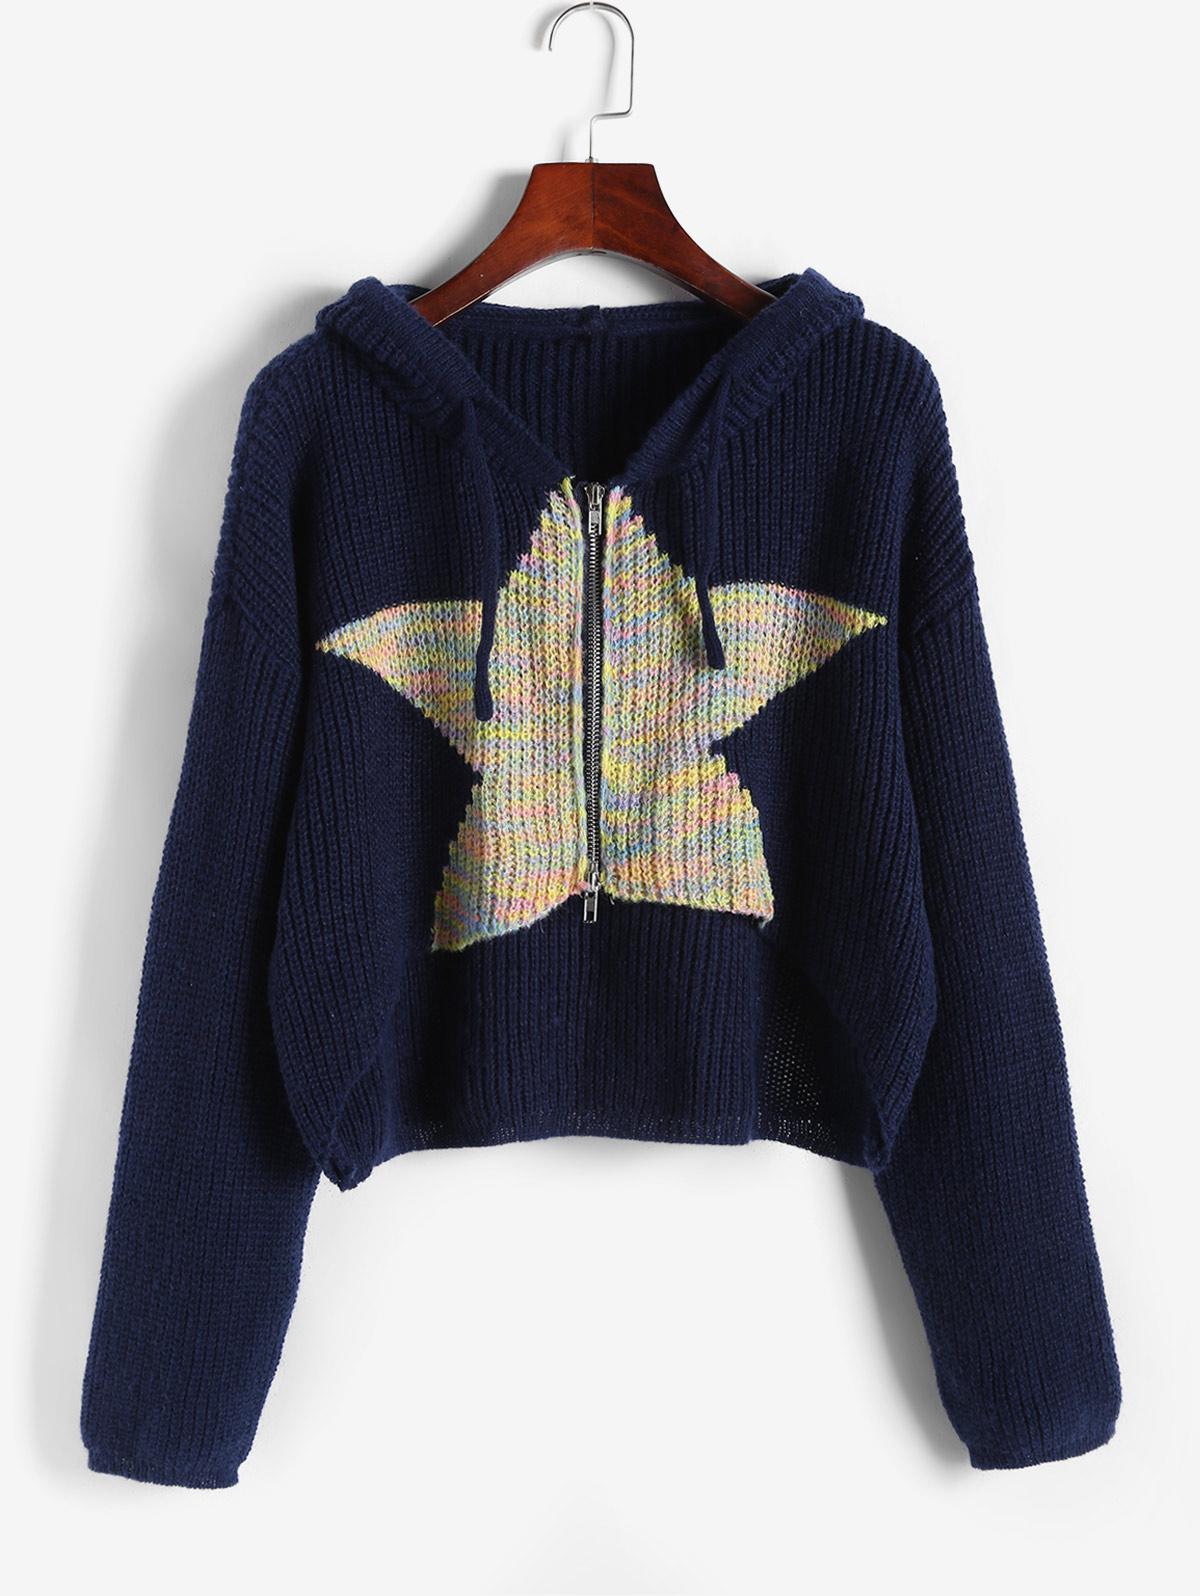 ZAFUL Star Graphic Irregular Hem Hooded Sweater Jacket M Deep blue - Gender: female